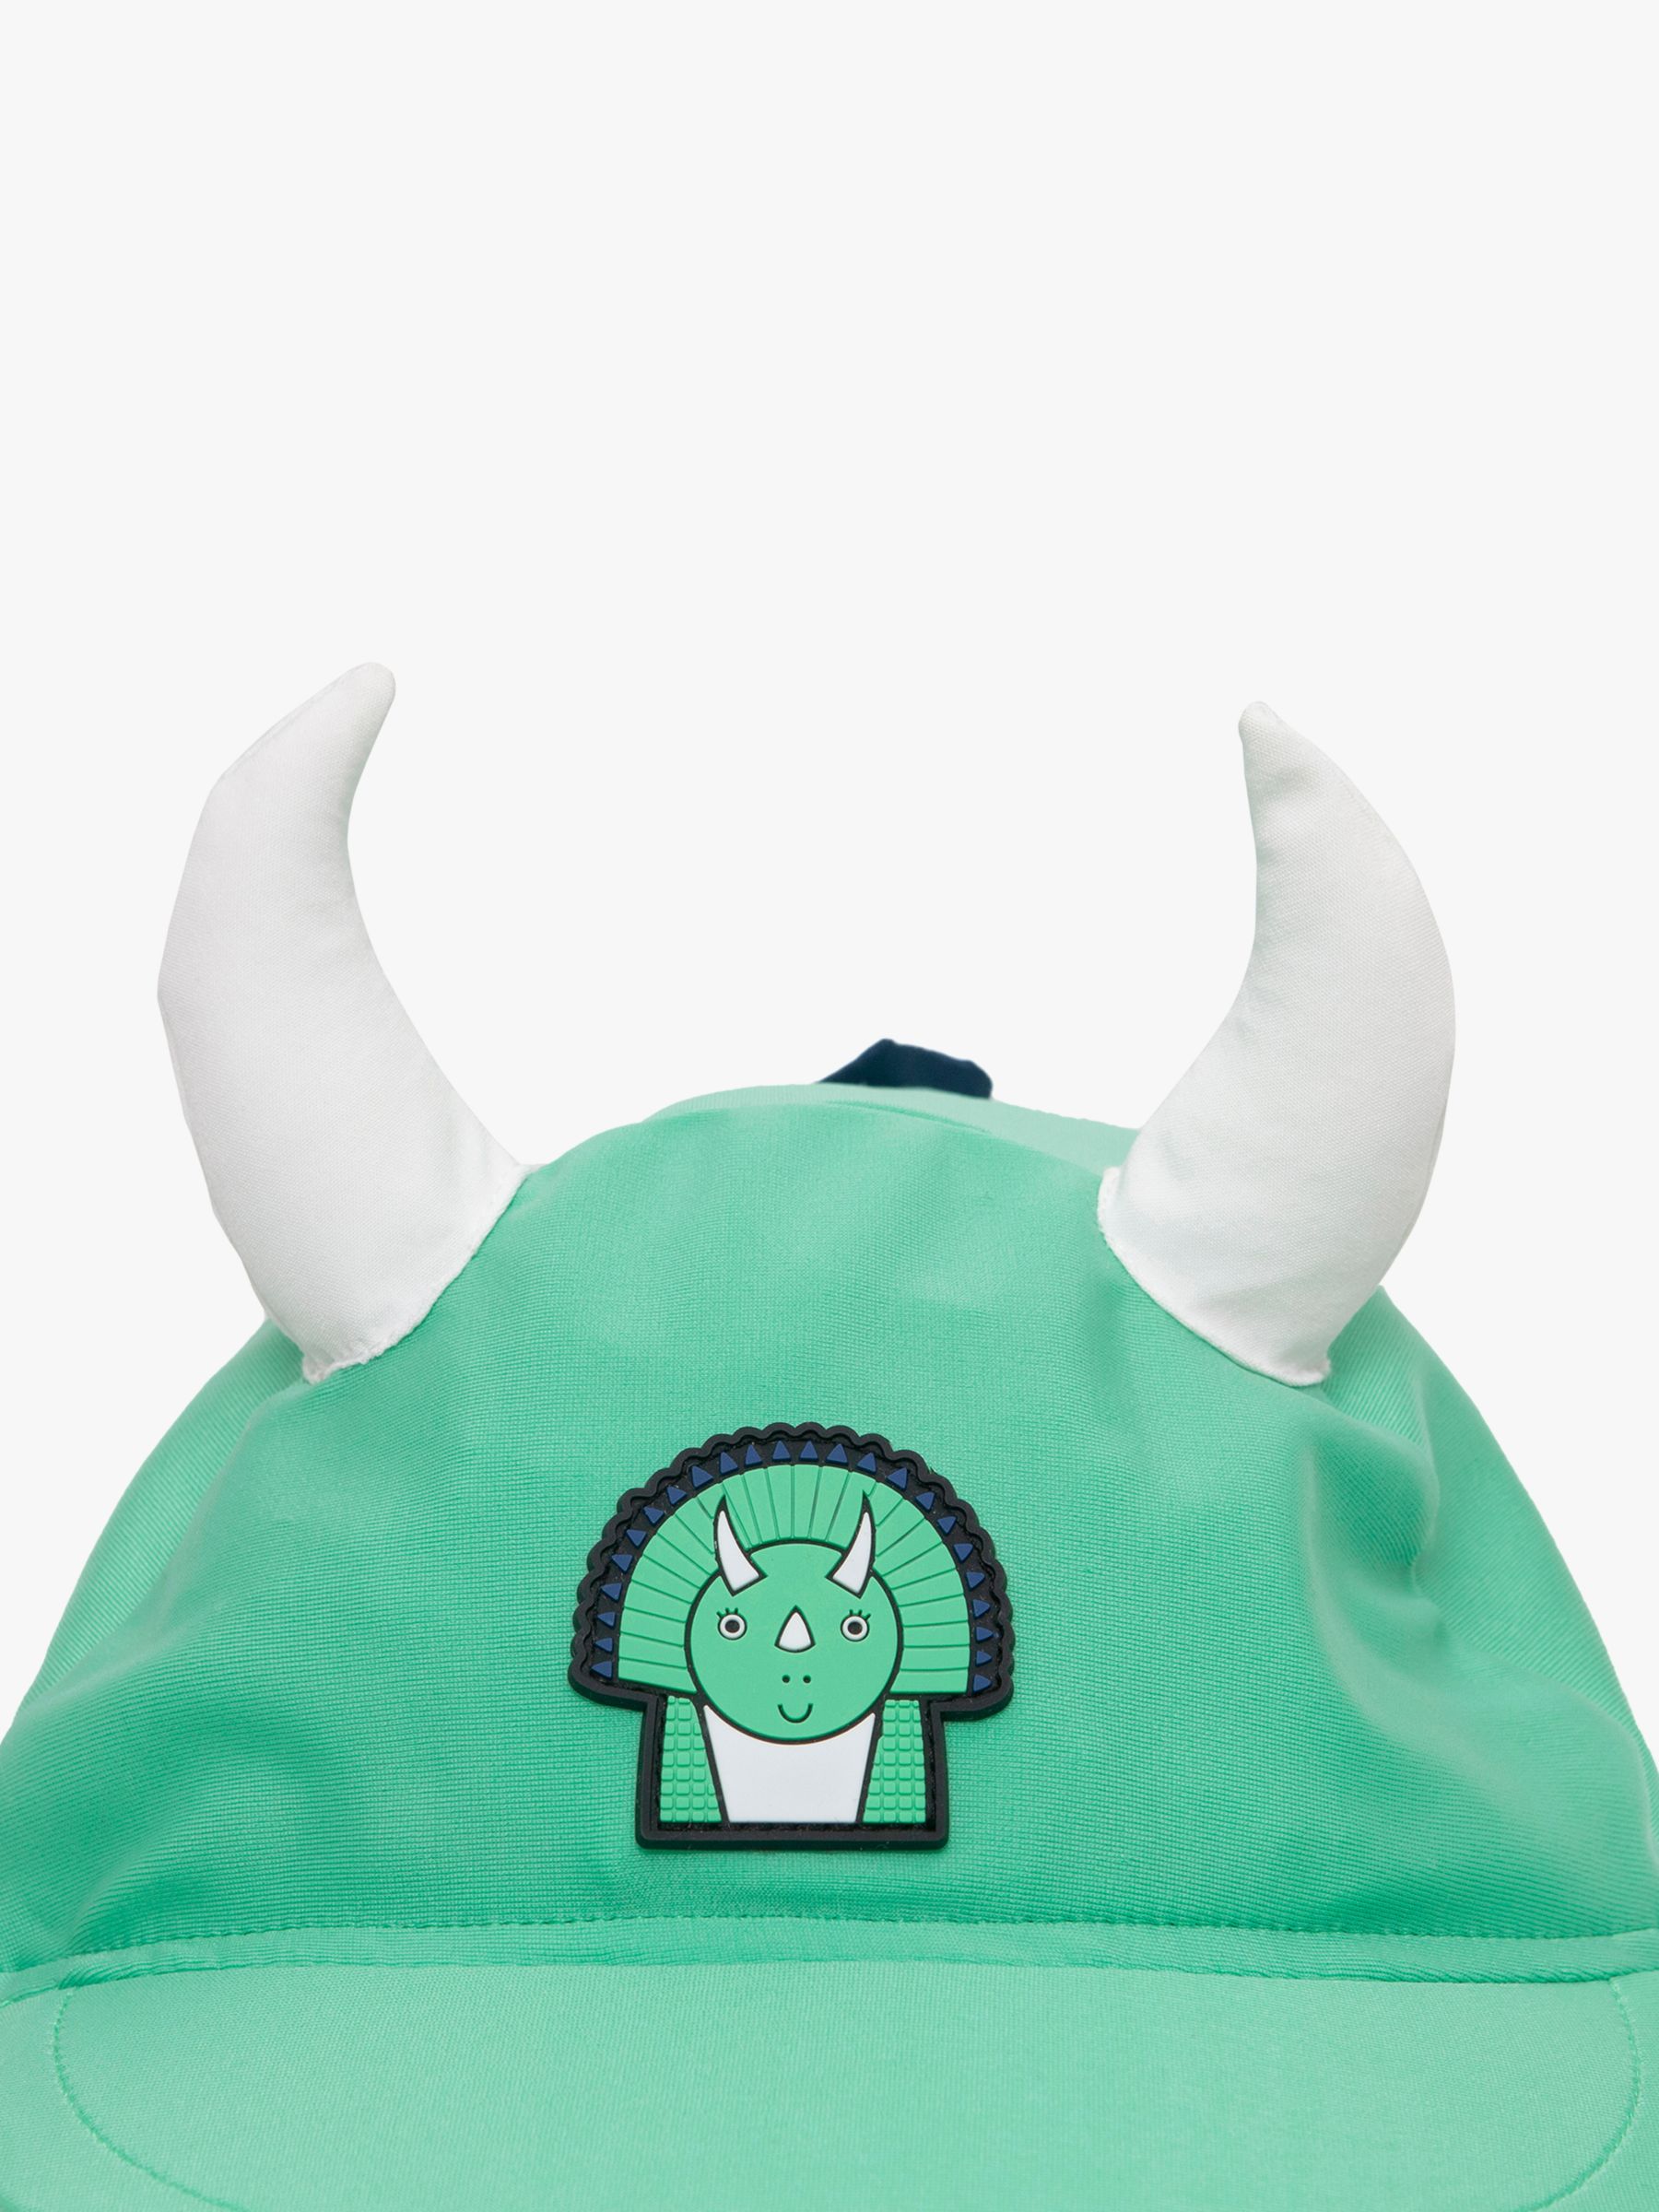 Roarsome Kids' Spike Summer Hat, Green, One Size